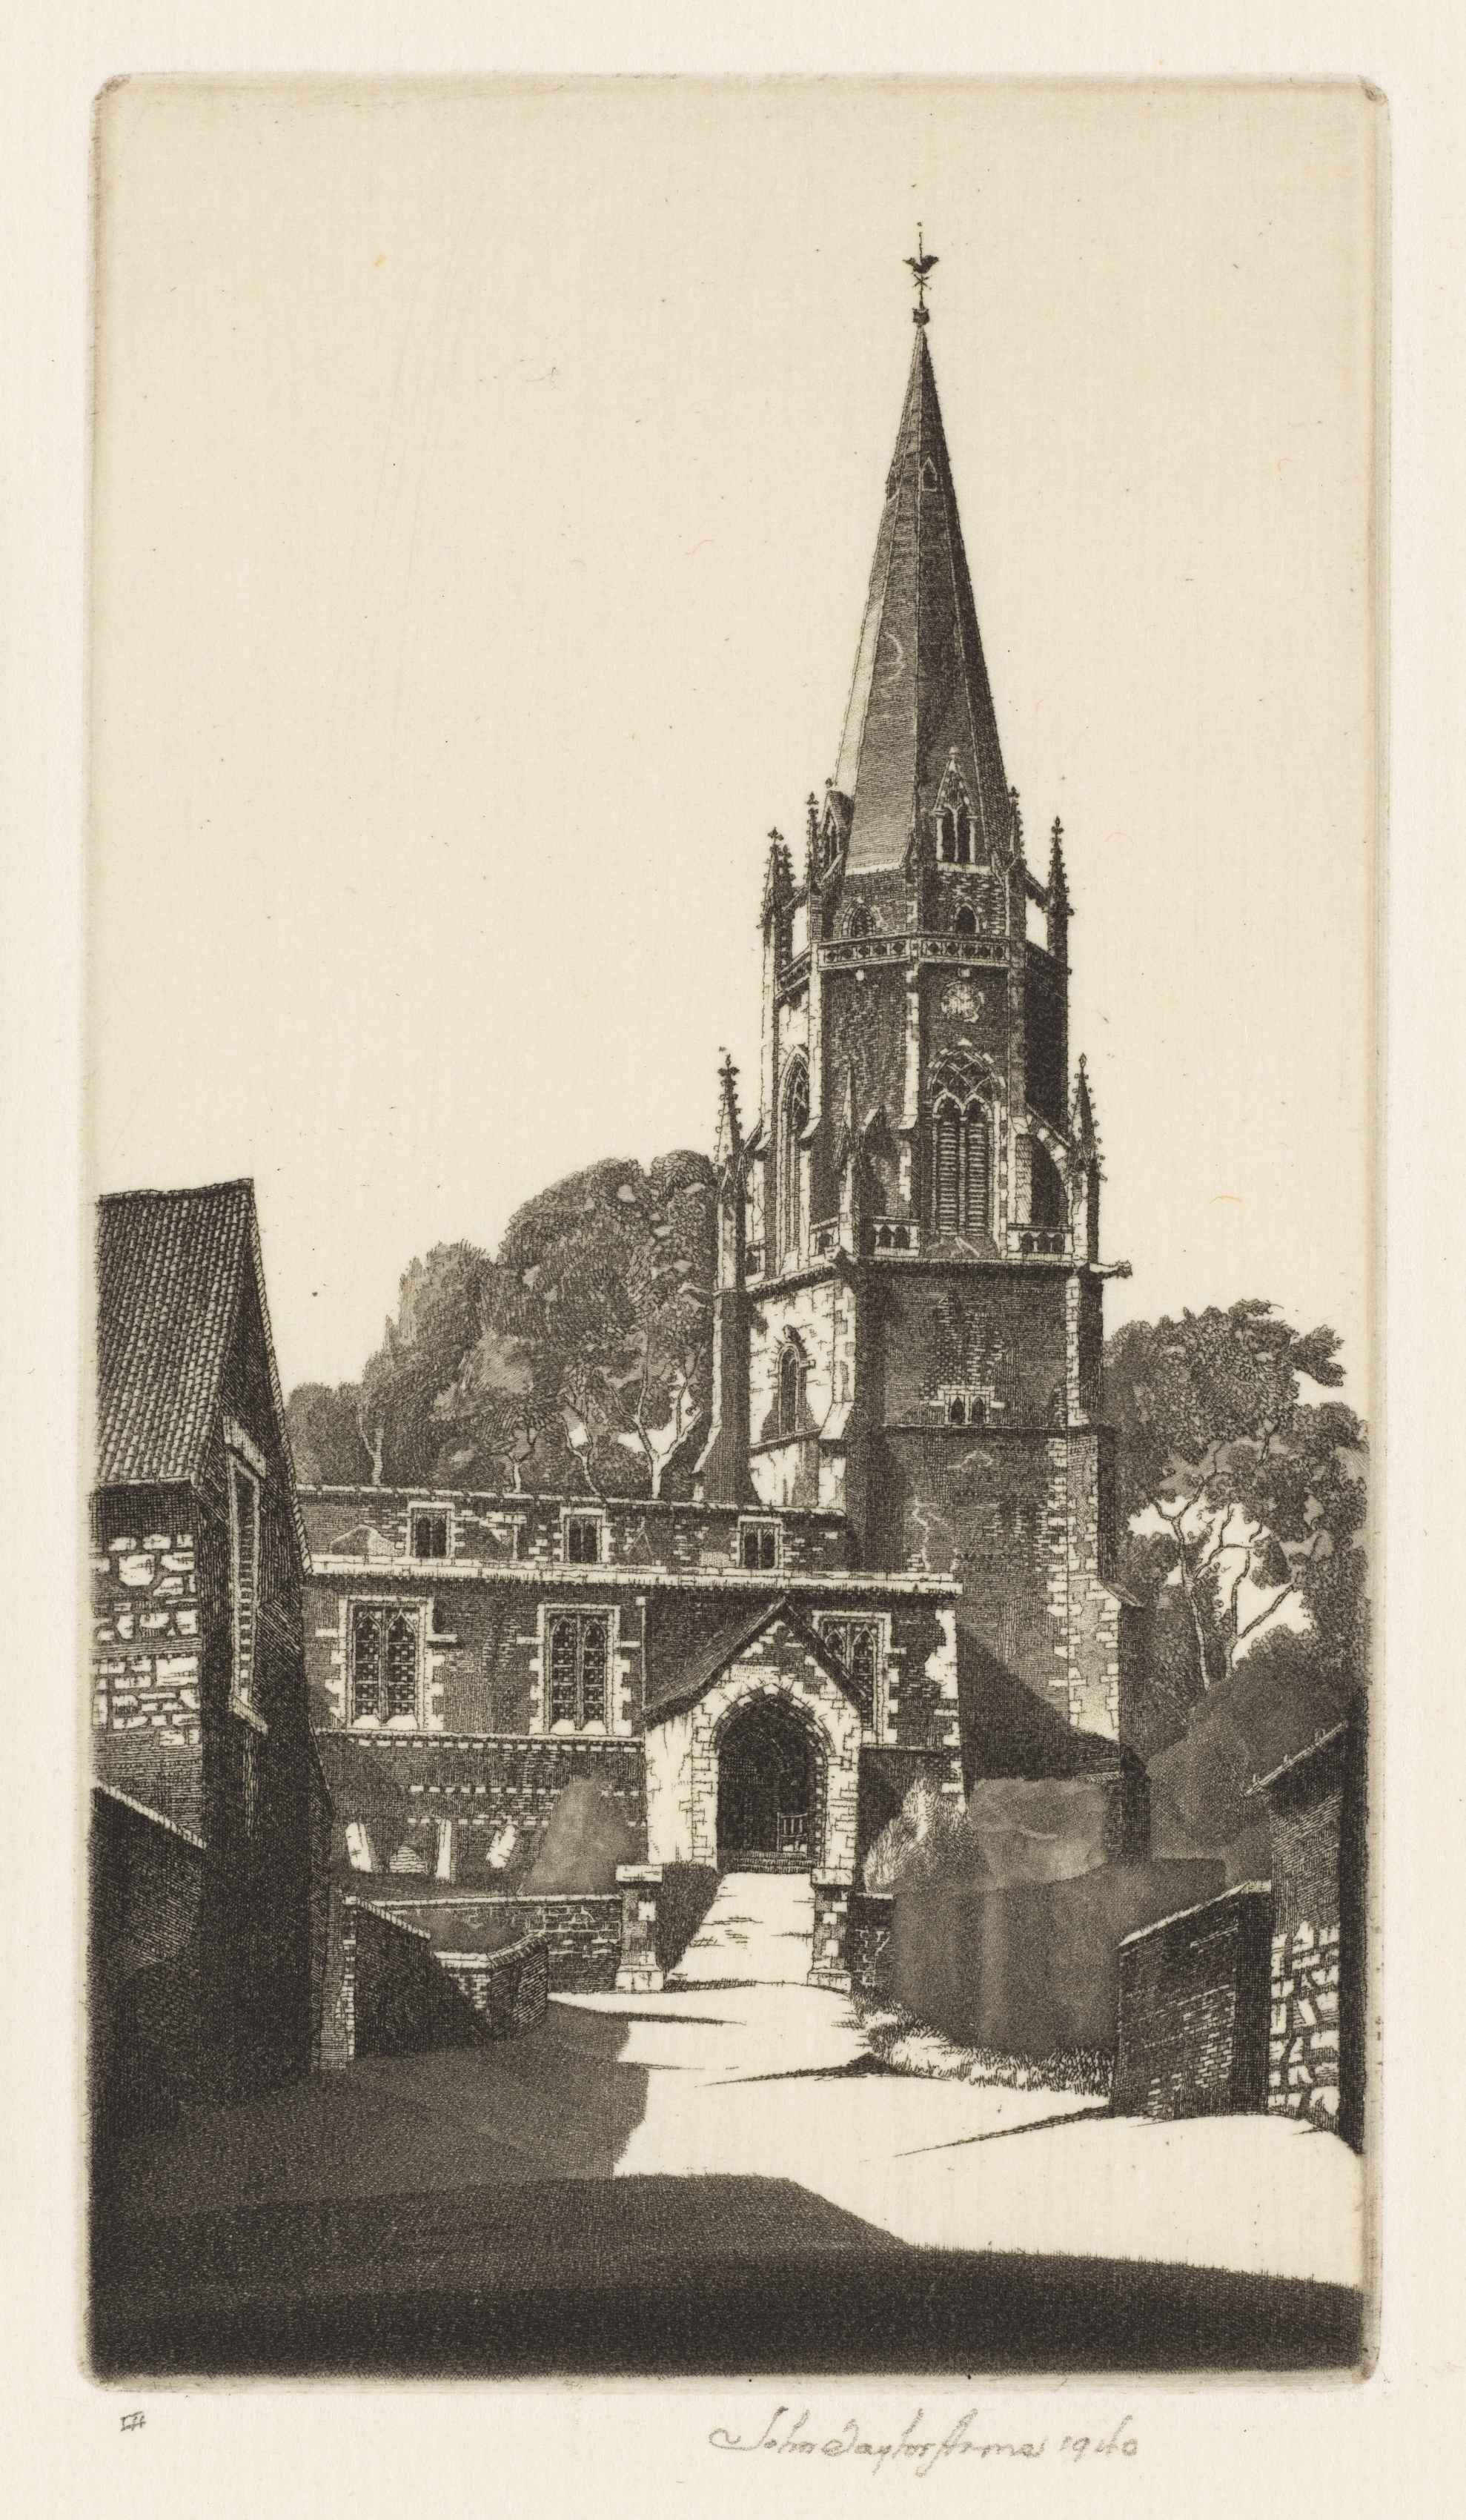 English Series No. 7:, Miniature Series No. 24: Wilby Church, Northamptonshire, England